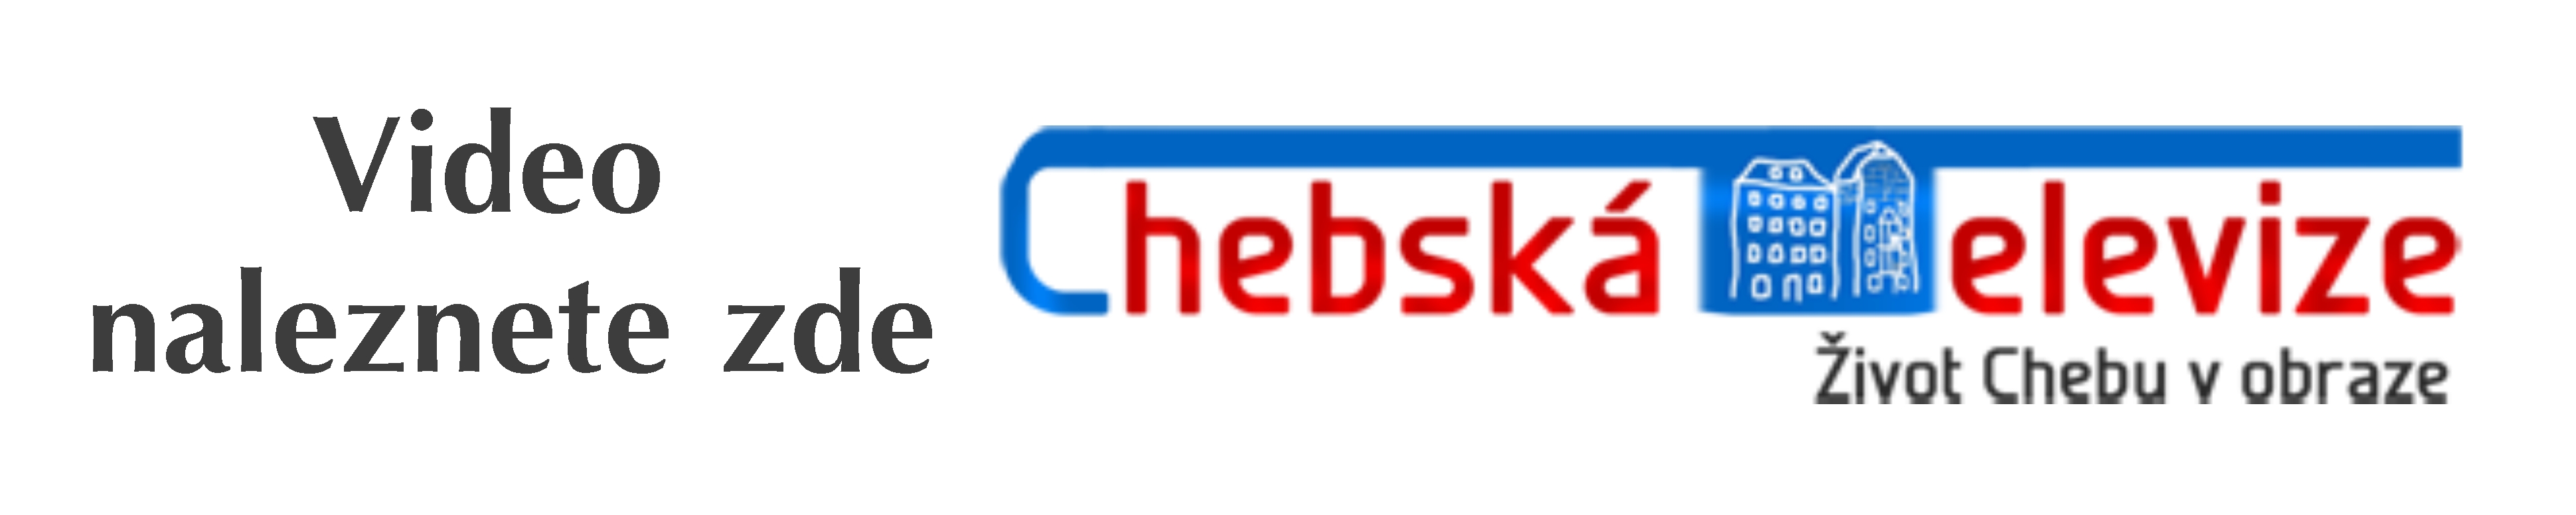 chebska televize logo video